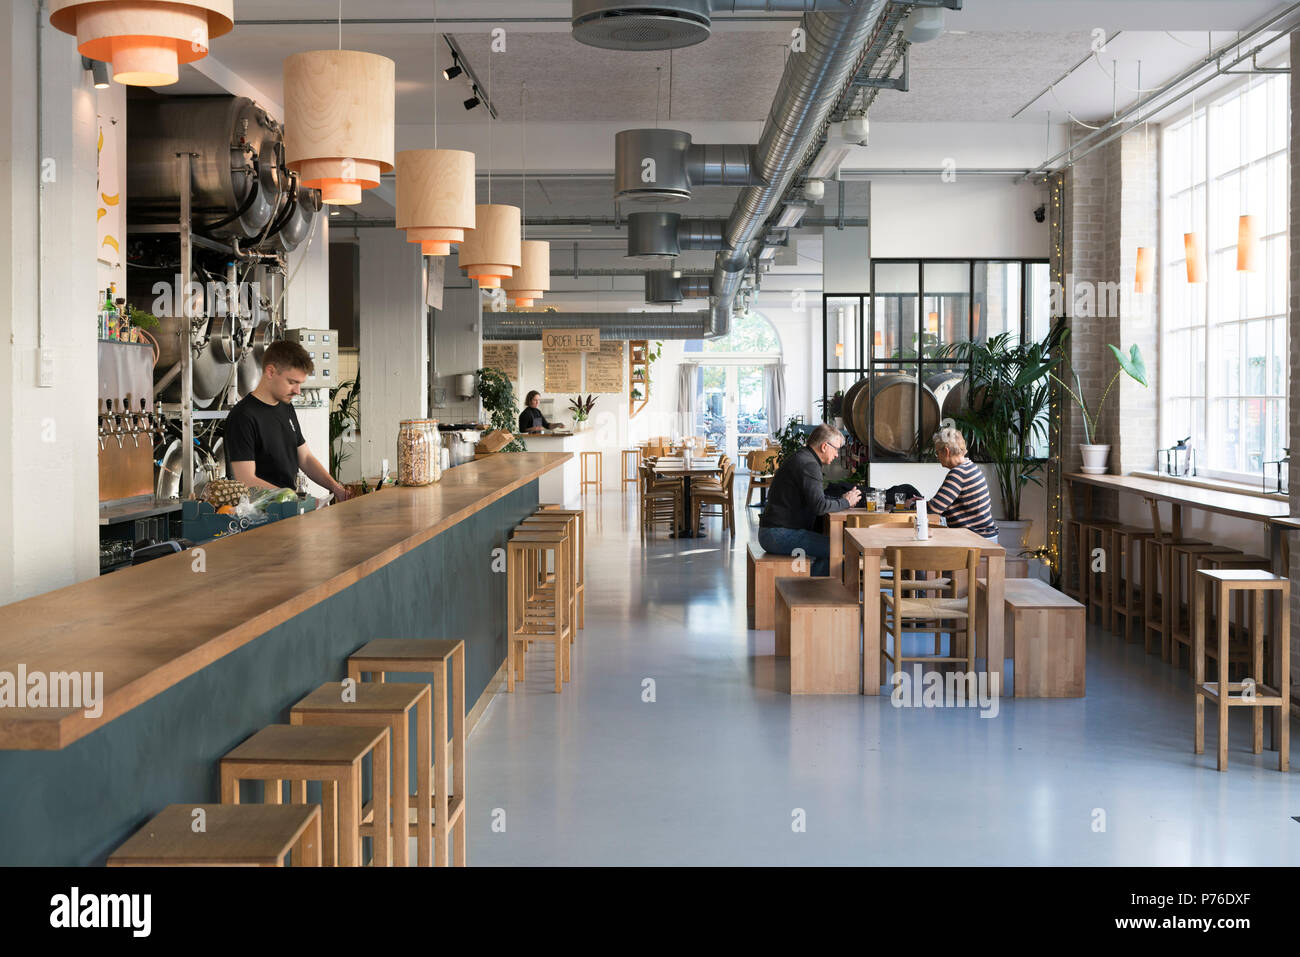 Brus Brewery restaurant, Copenhagen Stock Photo - Alamy